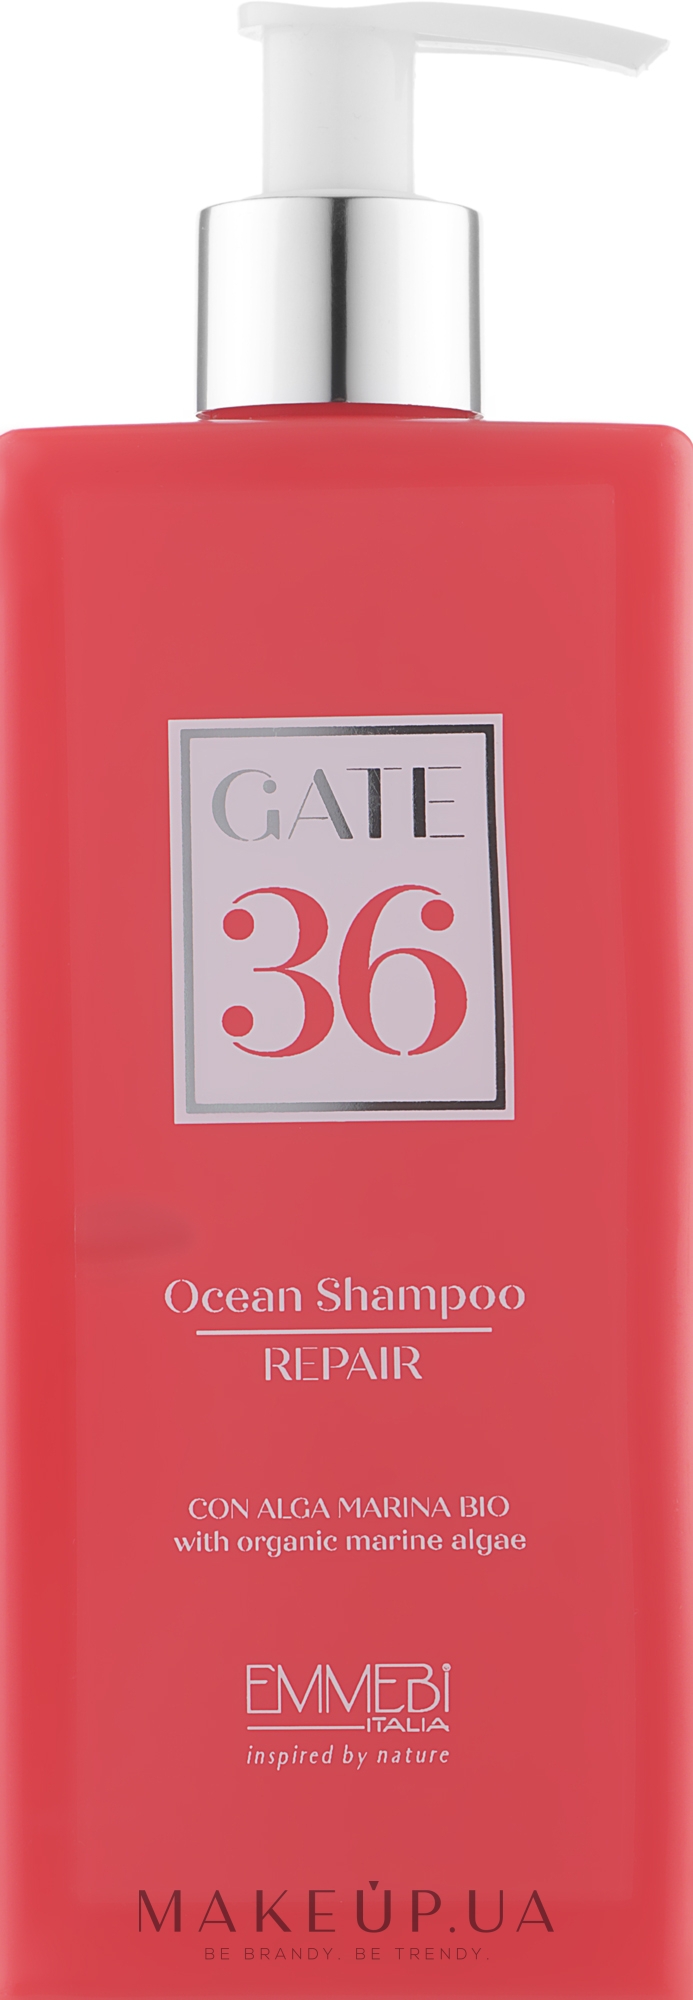 Восстанавливающий шампунь для волос - Emmebi Italia Gate 36 Wash Ocean Shampoo Repair — фото 250ml